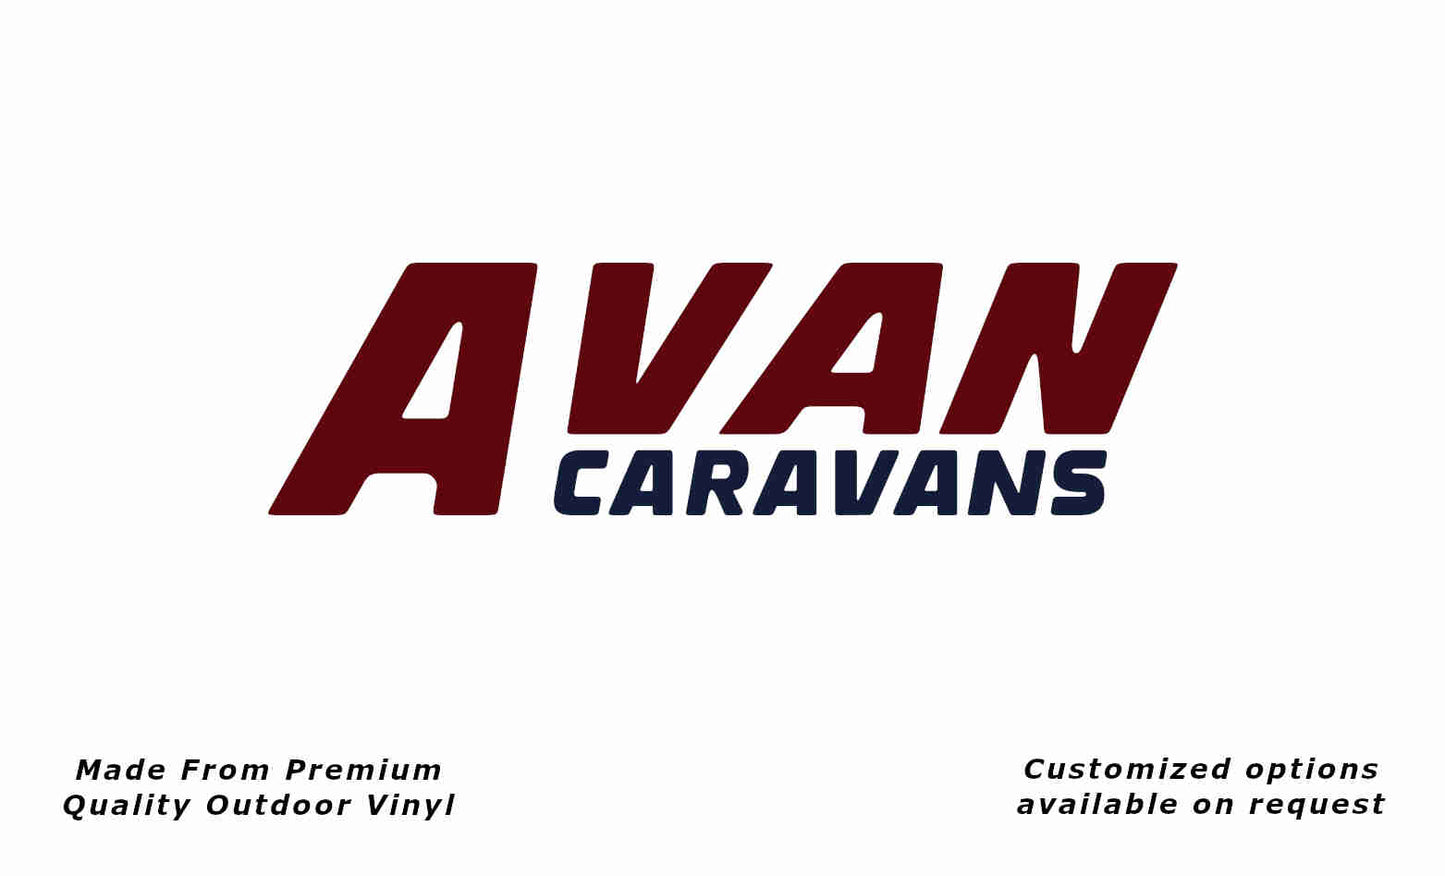 Avan caravans replacement vinyl decal sticker in purple red and deep sea blue.